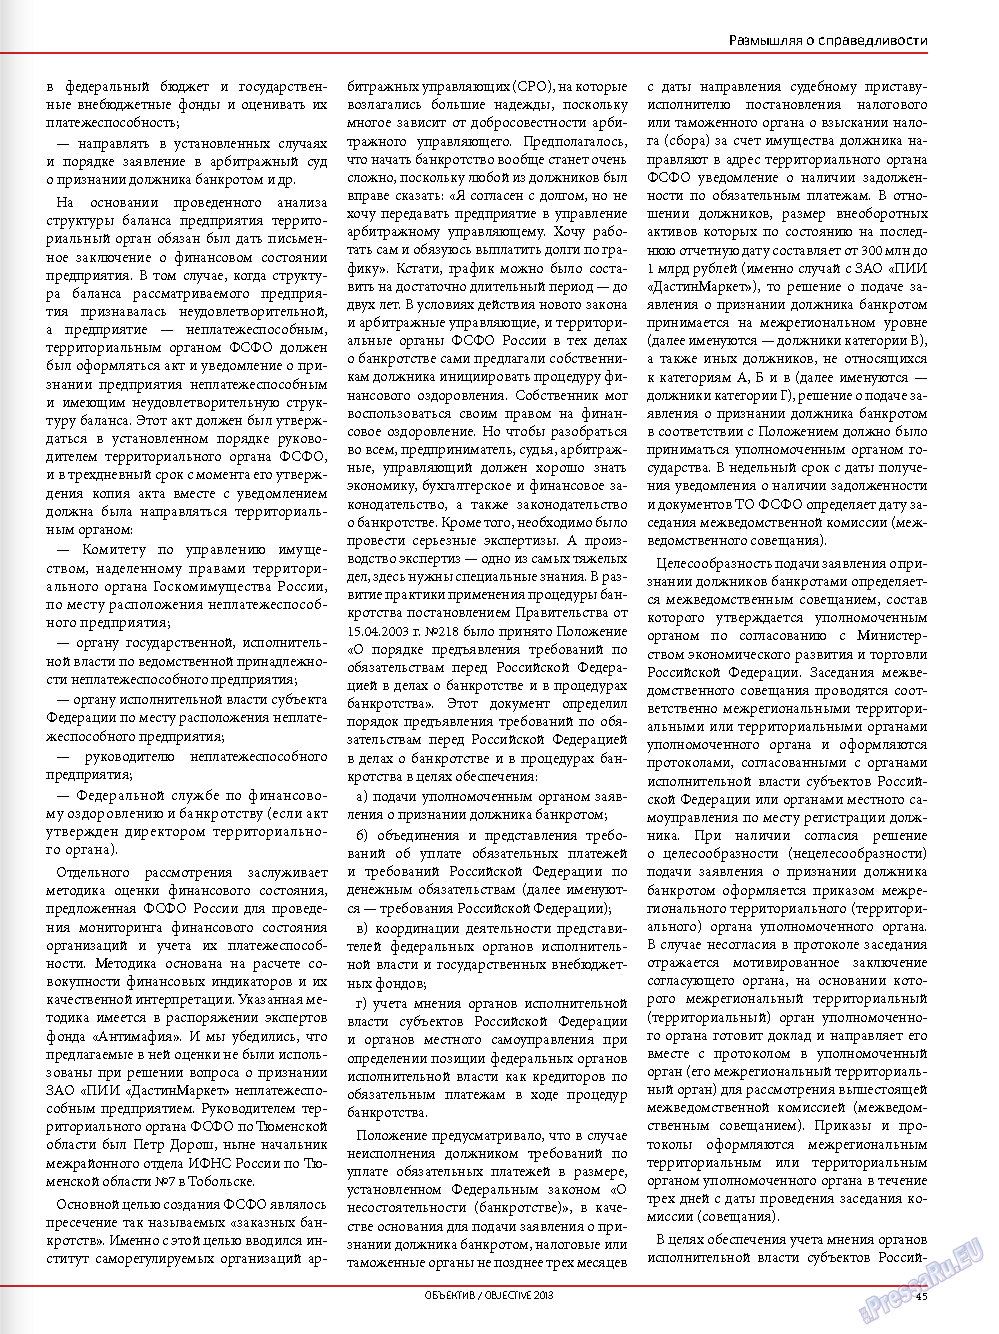 Объектив EU, журнал. 2013 №1 стр.47